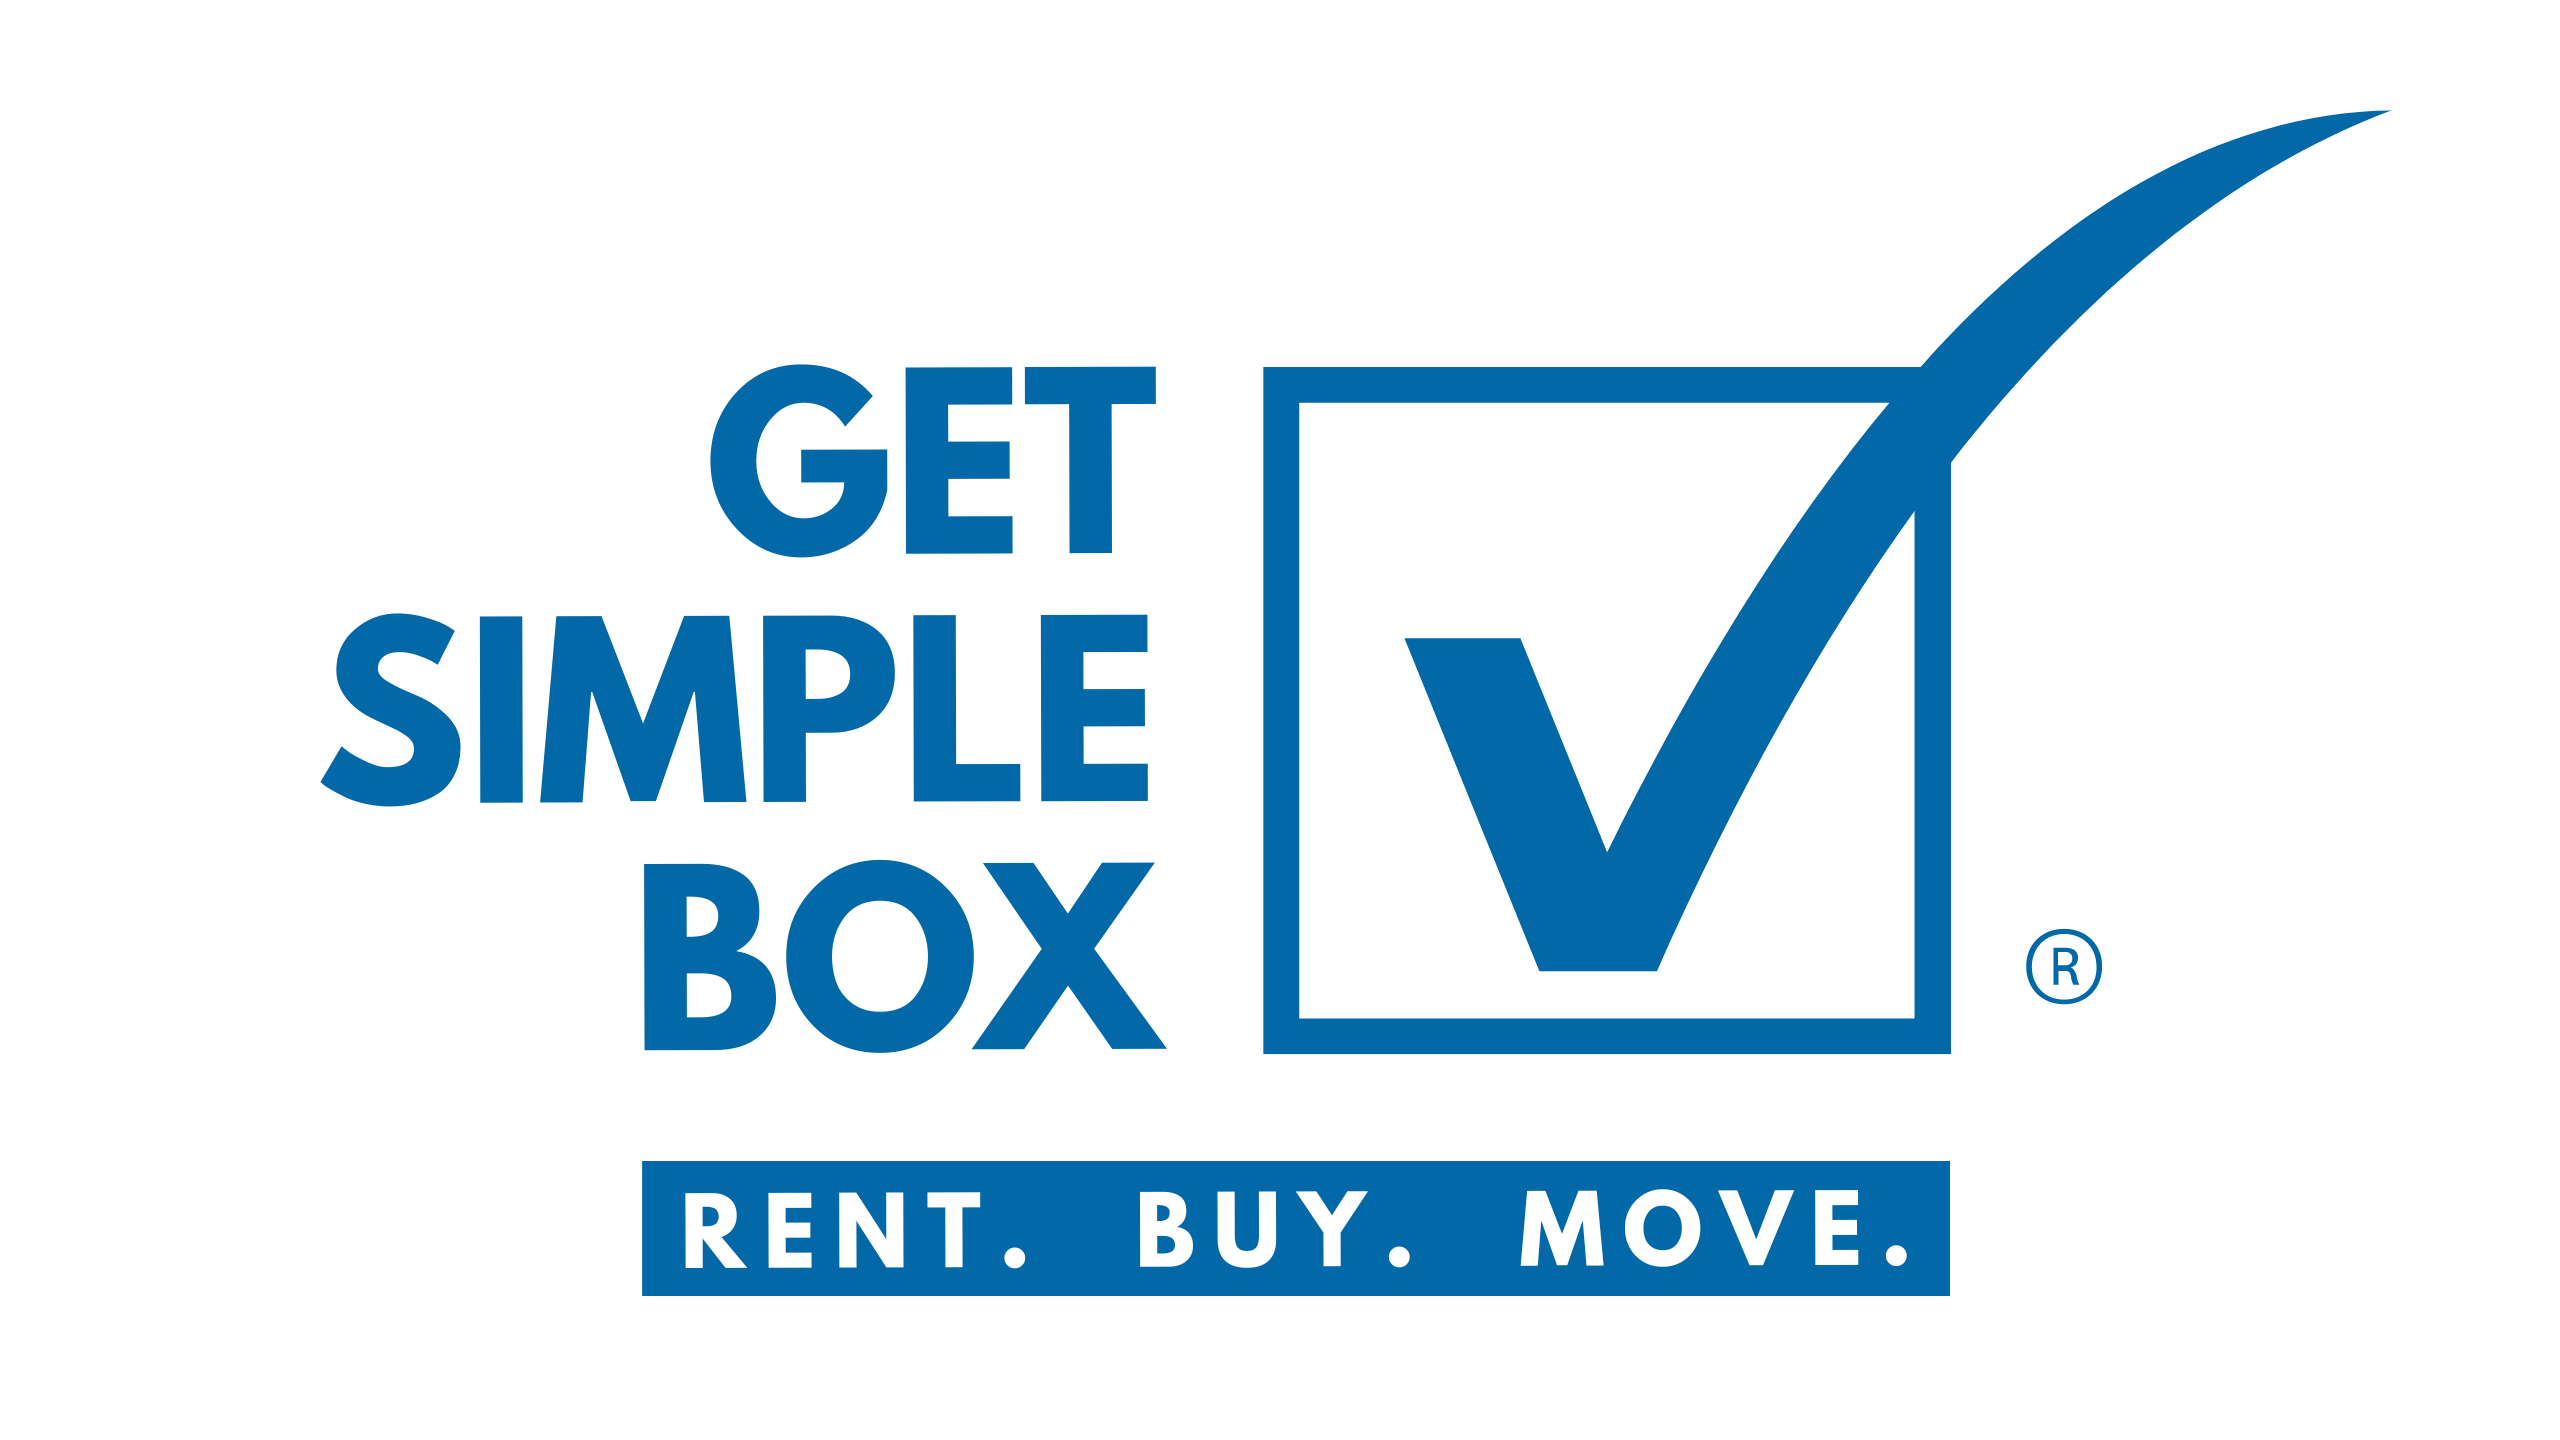 Simple Box Storage / getSimpleBox.com